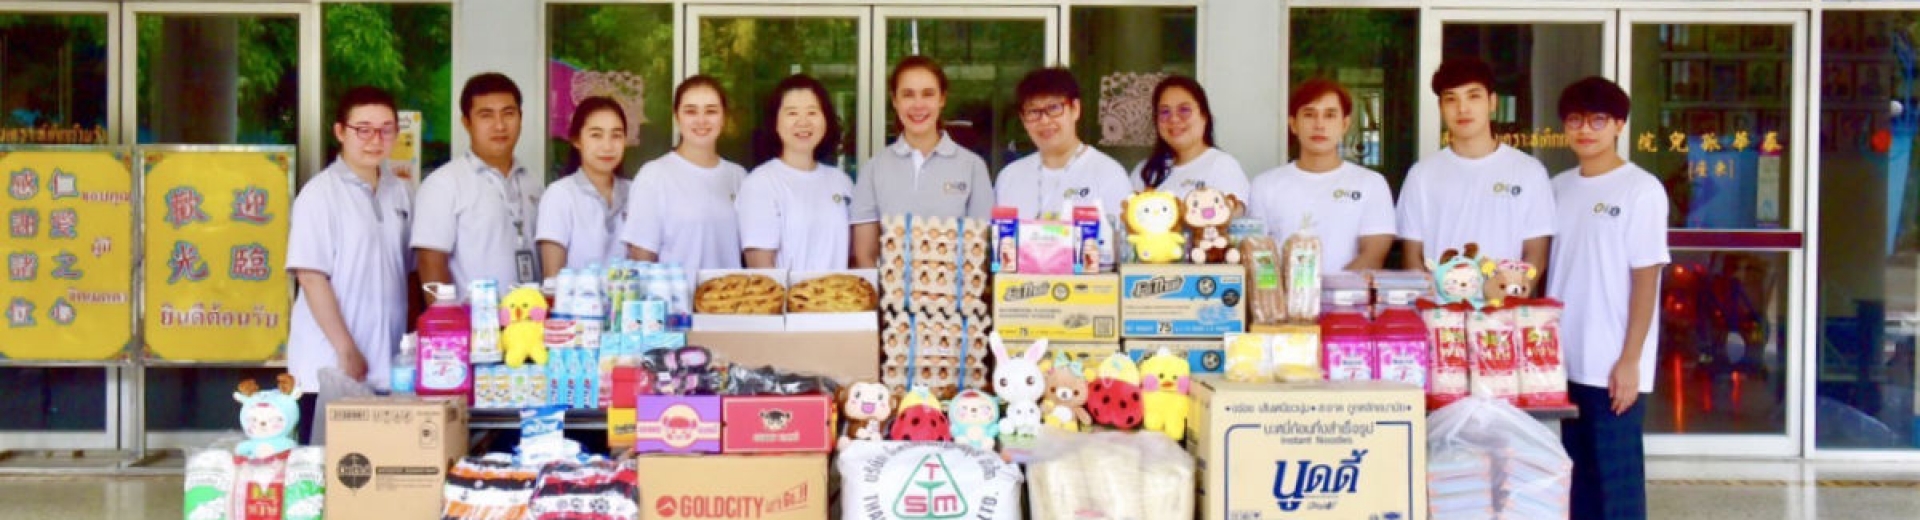 BGL Donates to Orphanage Foundation of Thailand Cover